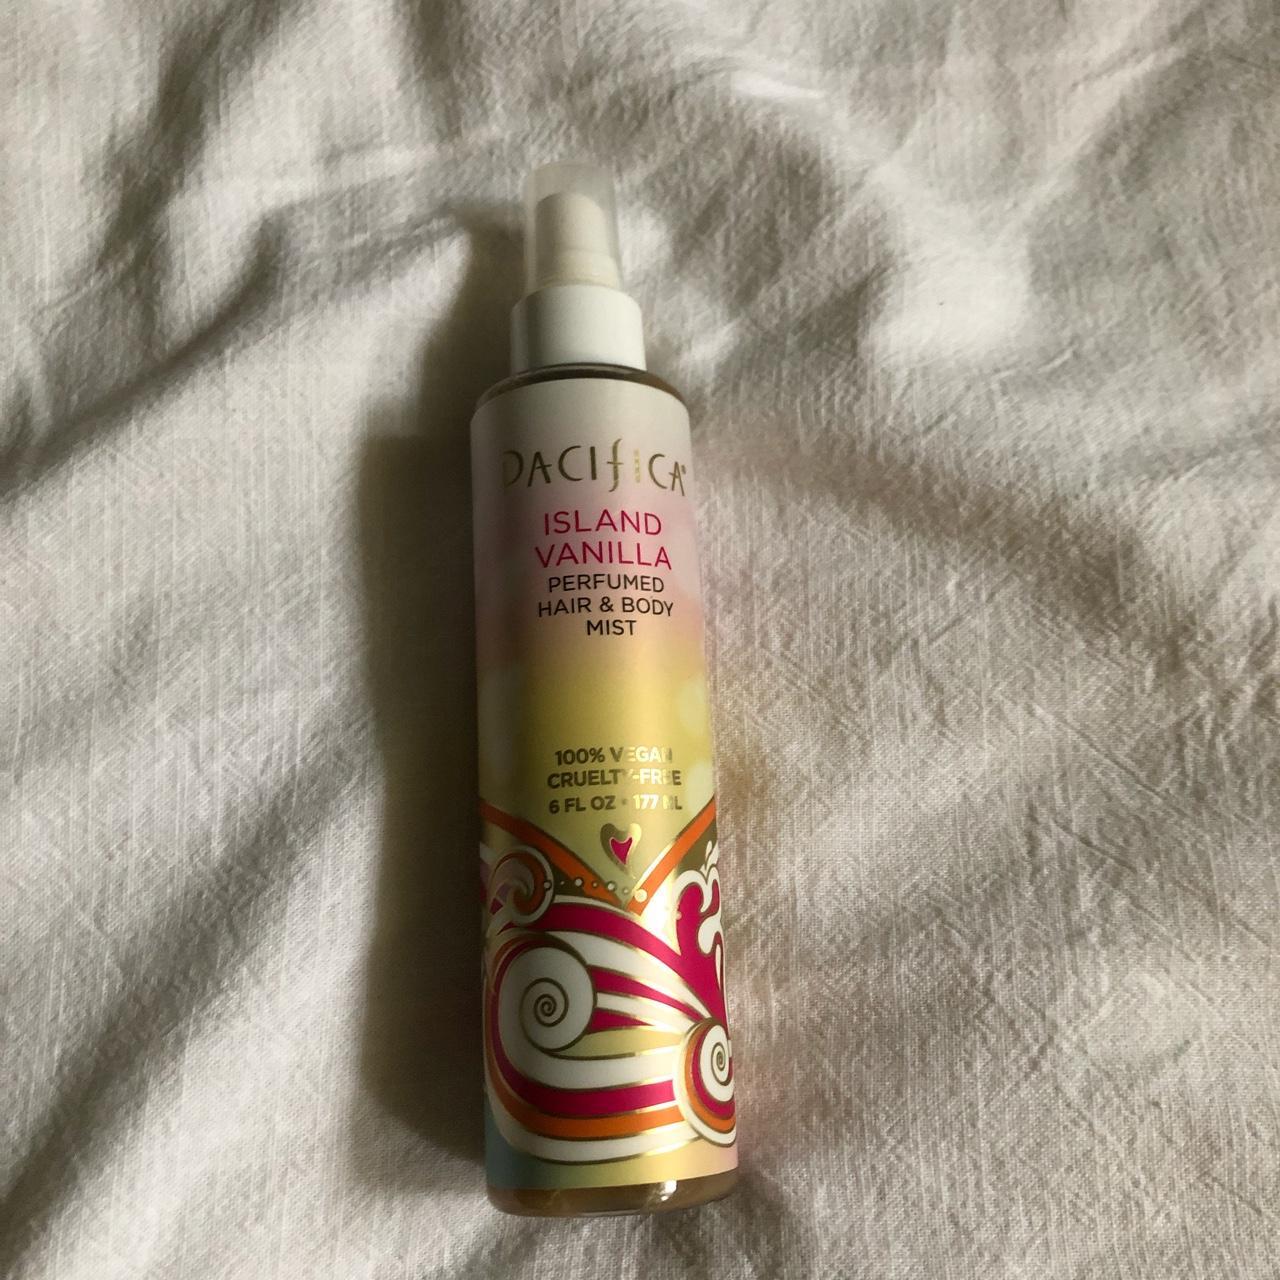 Pacifica Hair & Body Mist, Perfumed, Island Vanilla - 6 fl oz